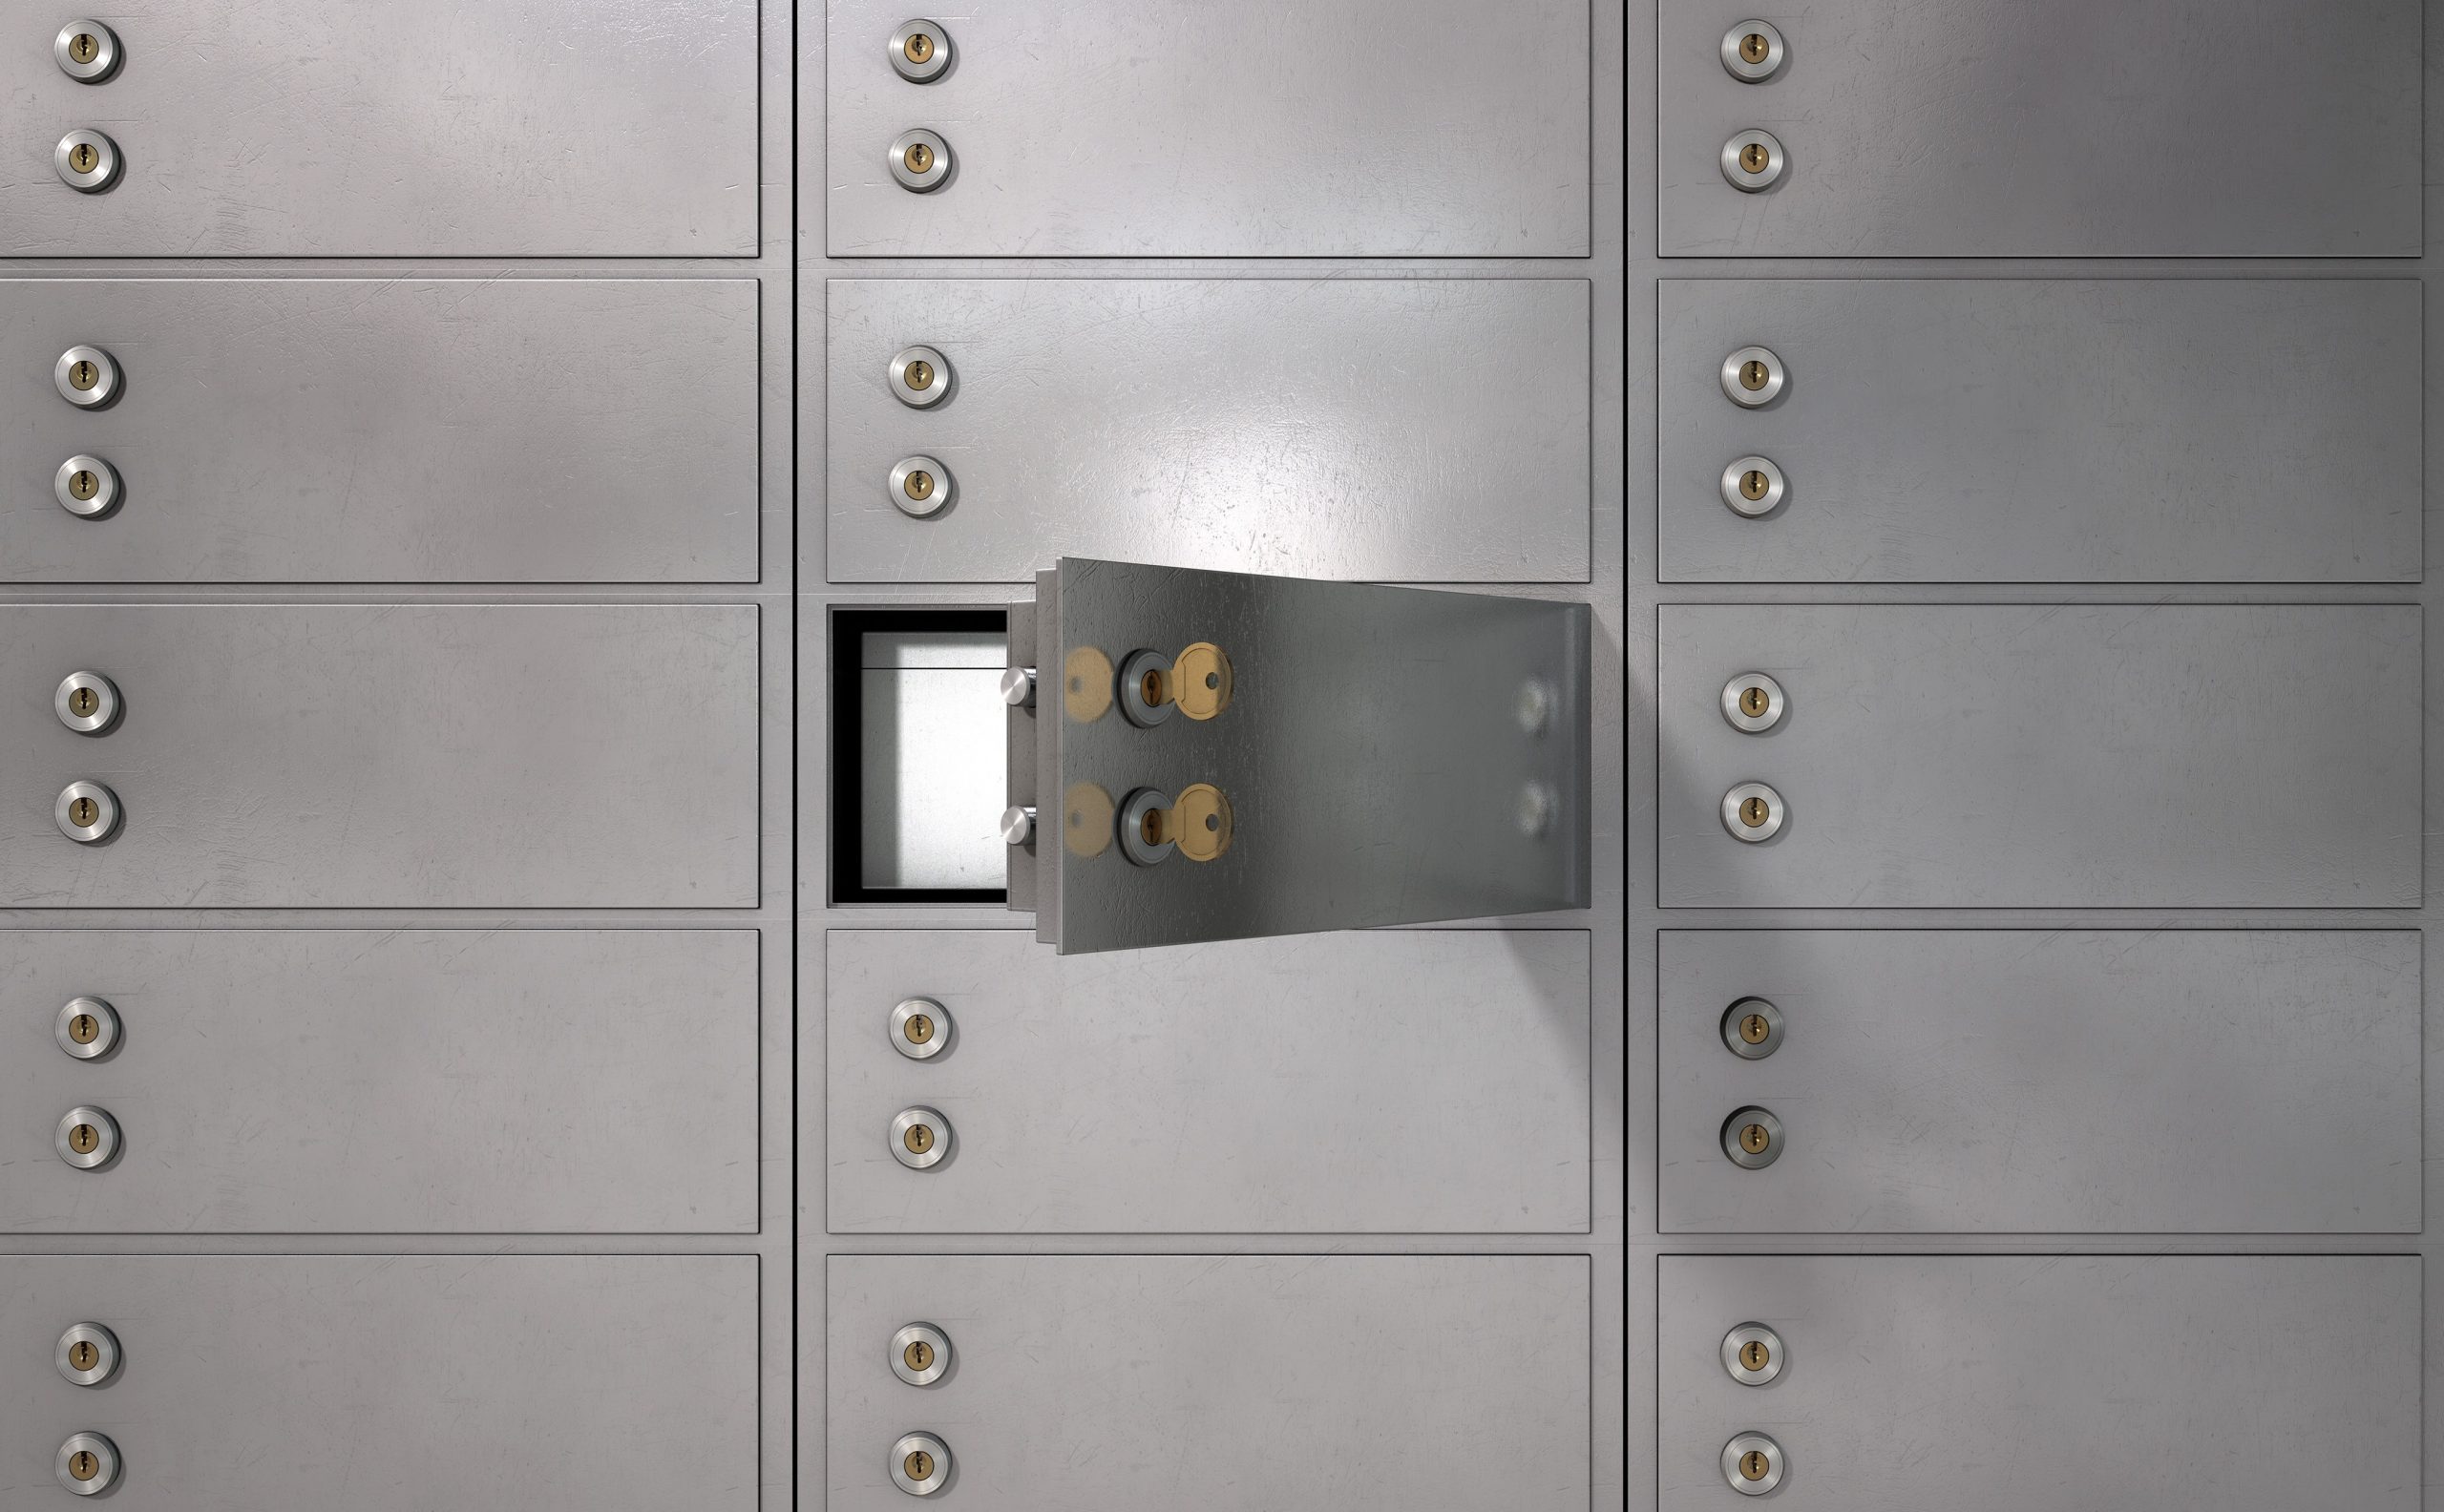 Wells Fargo Safe Deposit Box